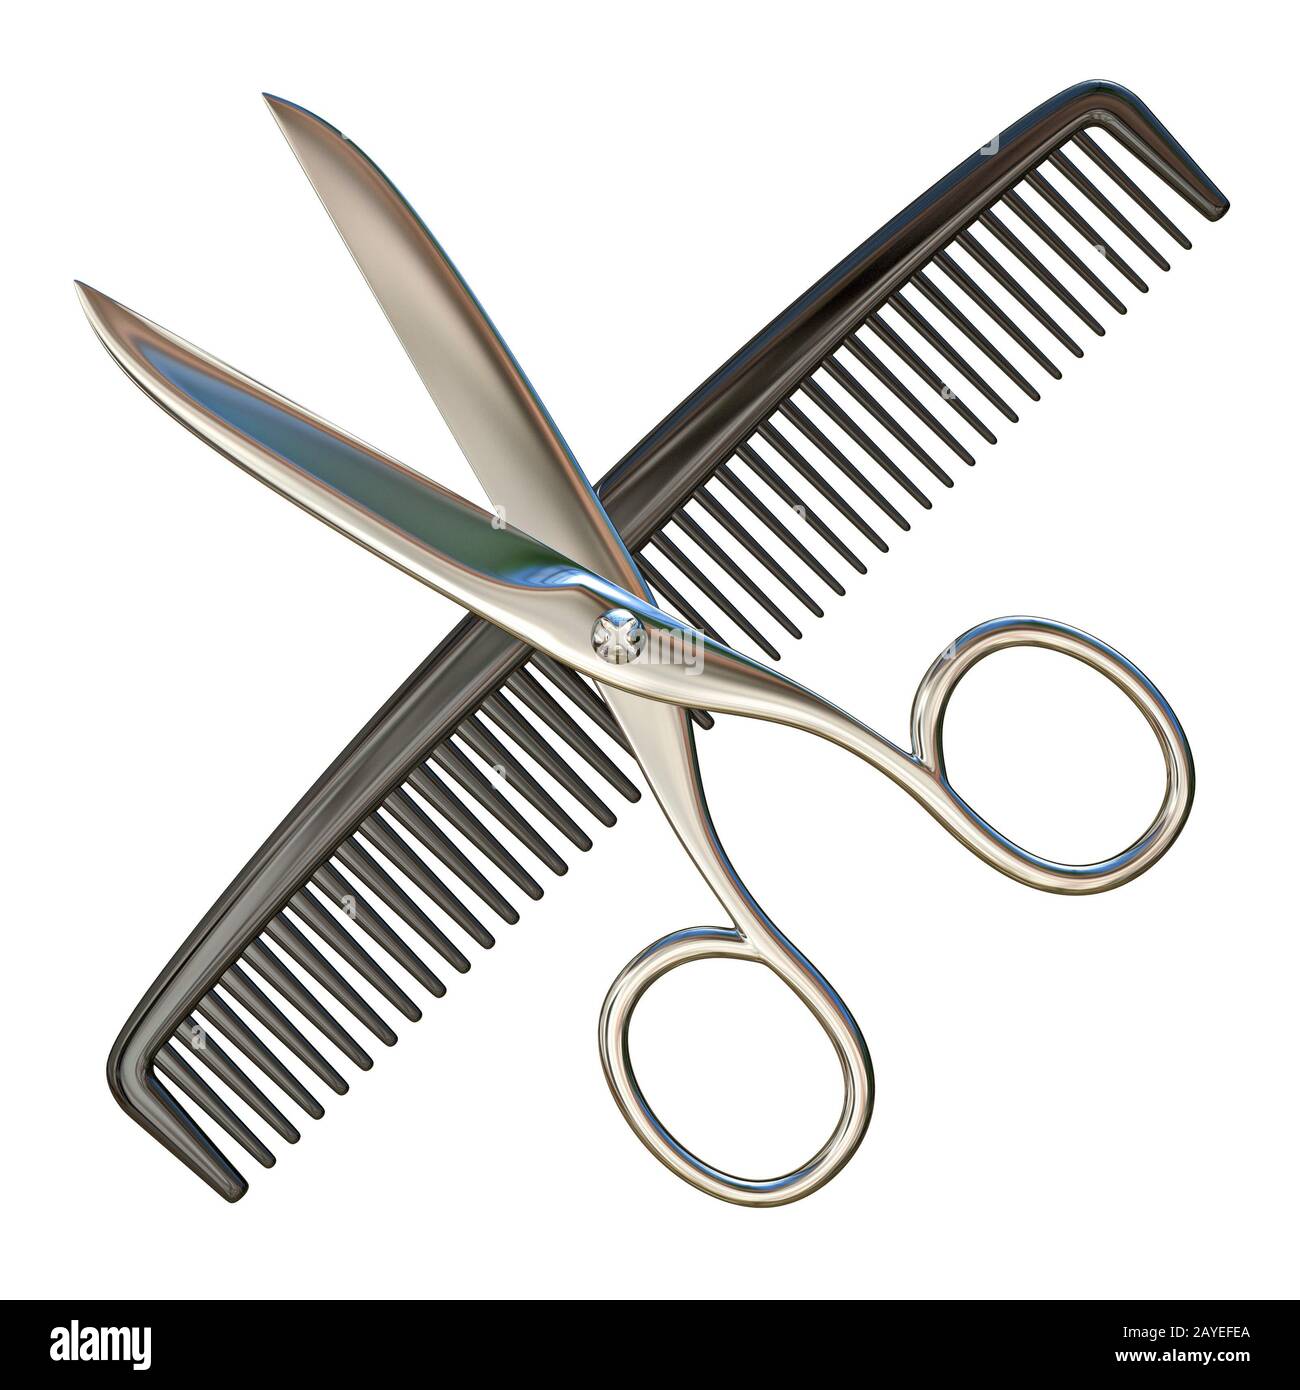 Scissors and comb 3D Stock Photo